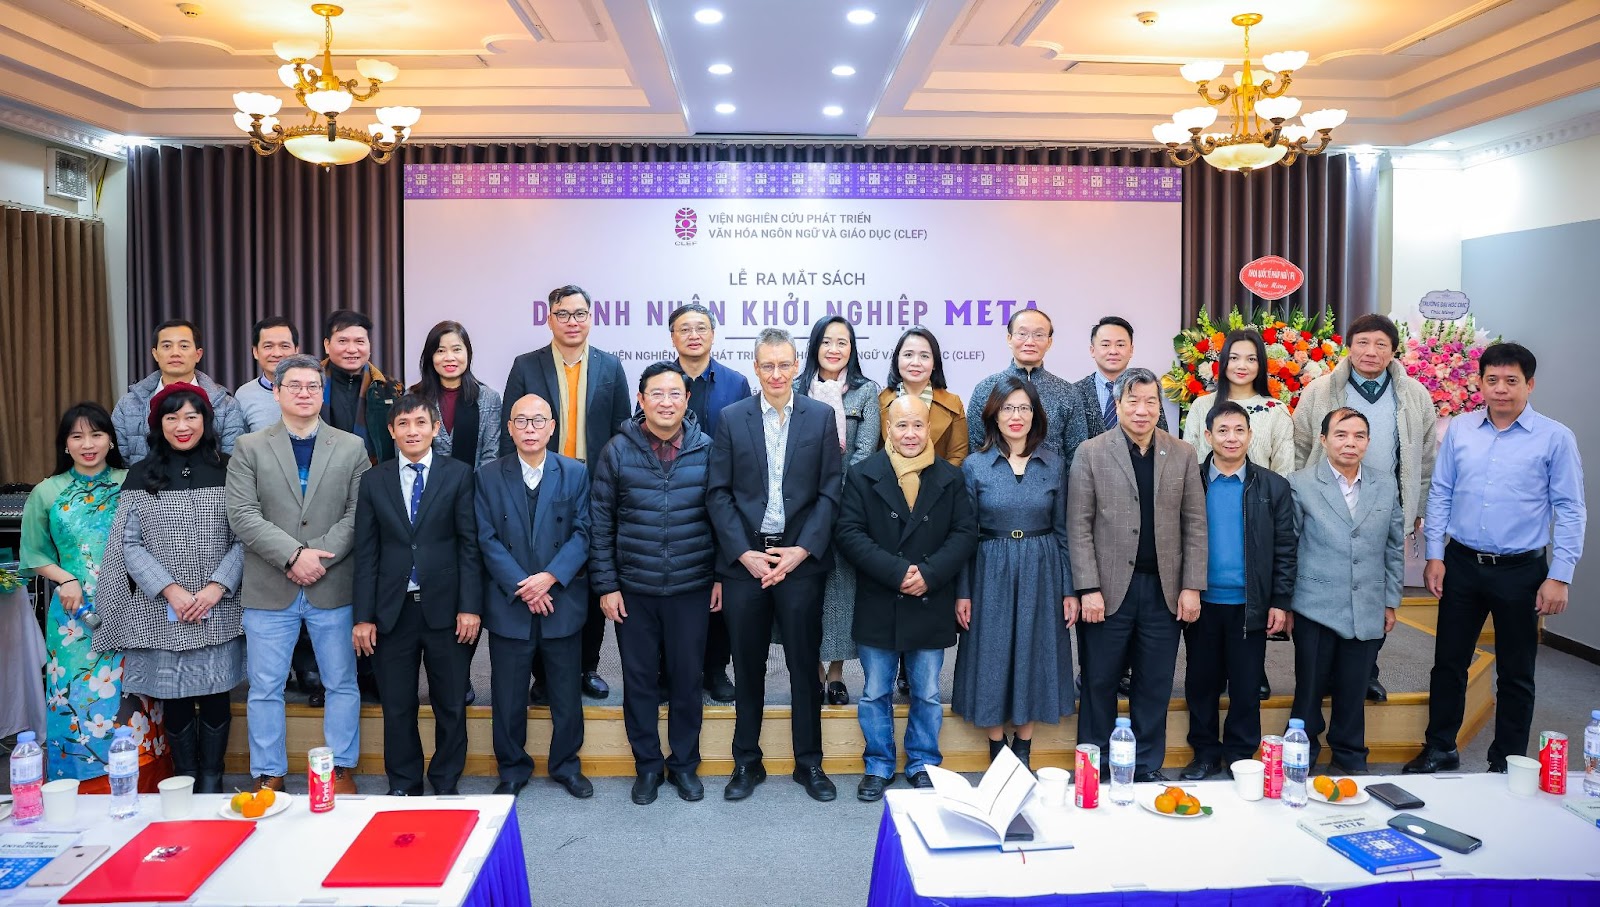 Book Launch Event 'Entrepreneurship META' by author Pierre Bonnet and translator Ngô Tự Lập